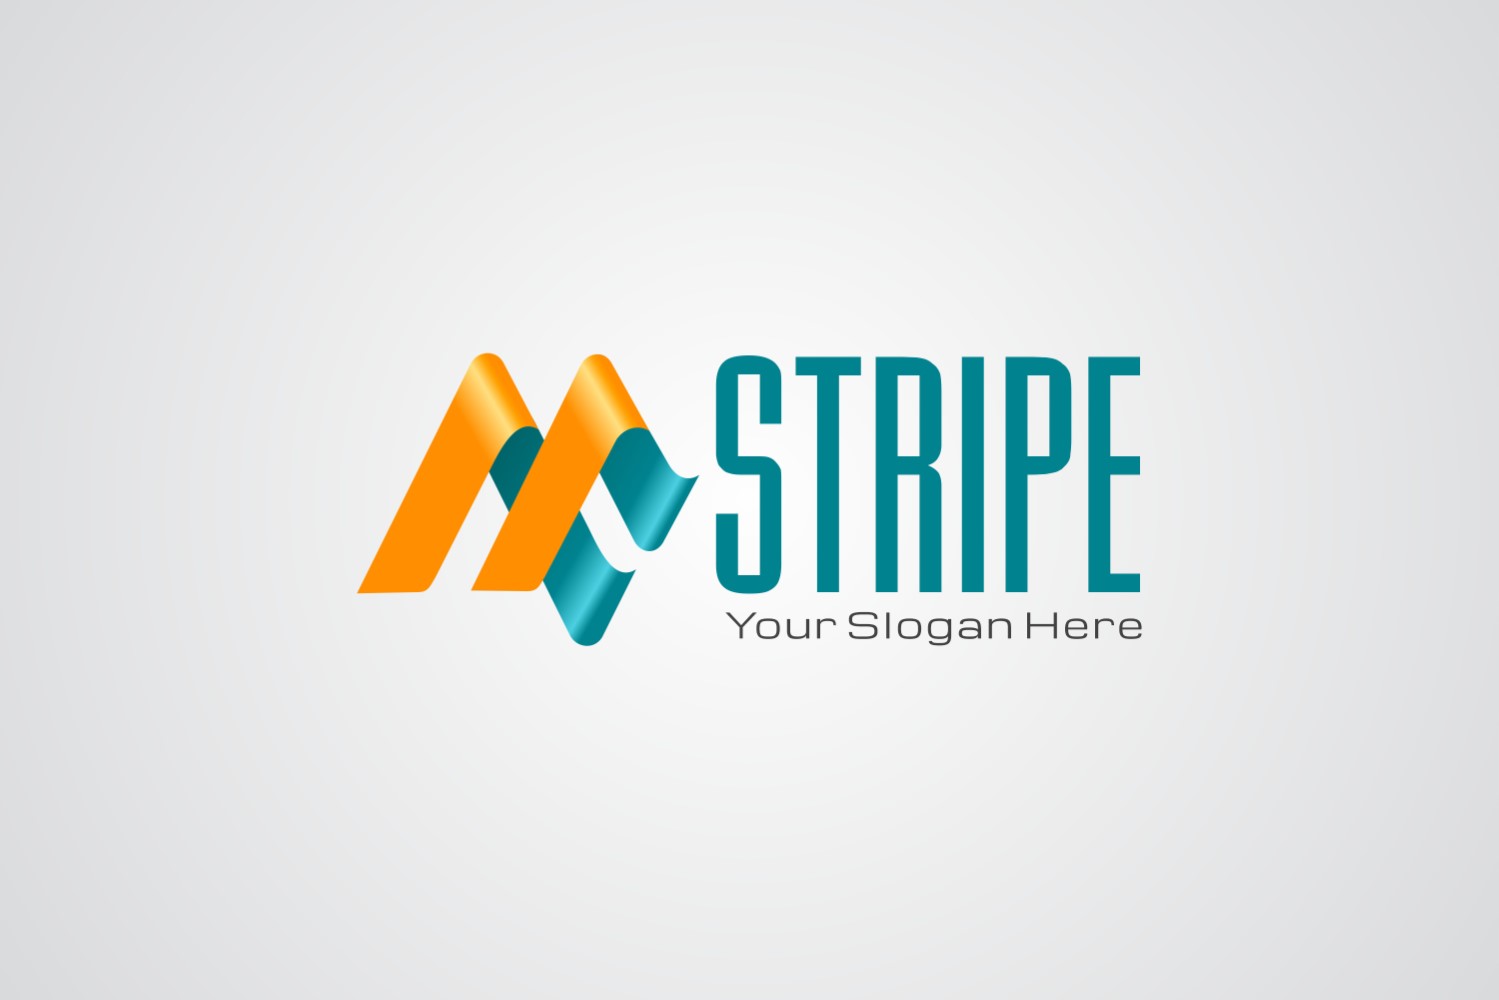 Stripe Logo Design Template